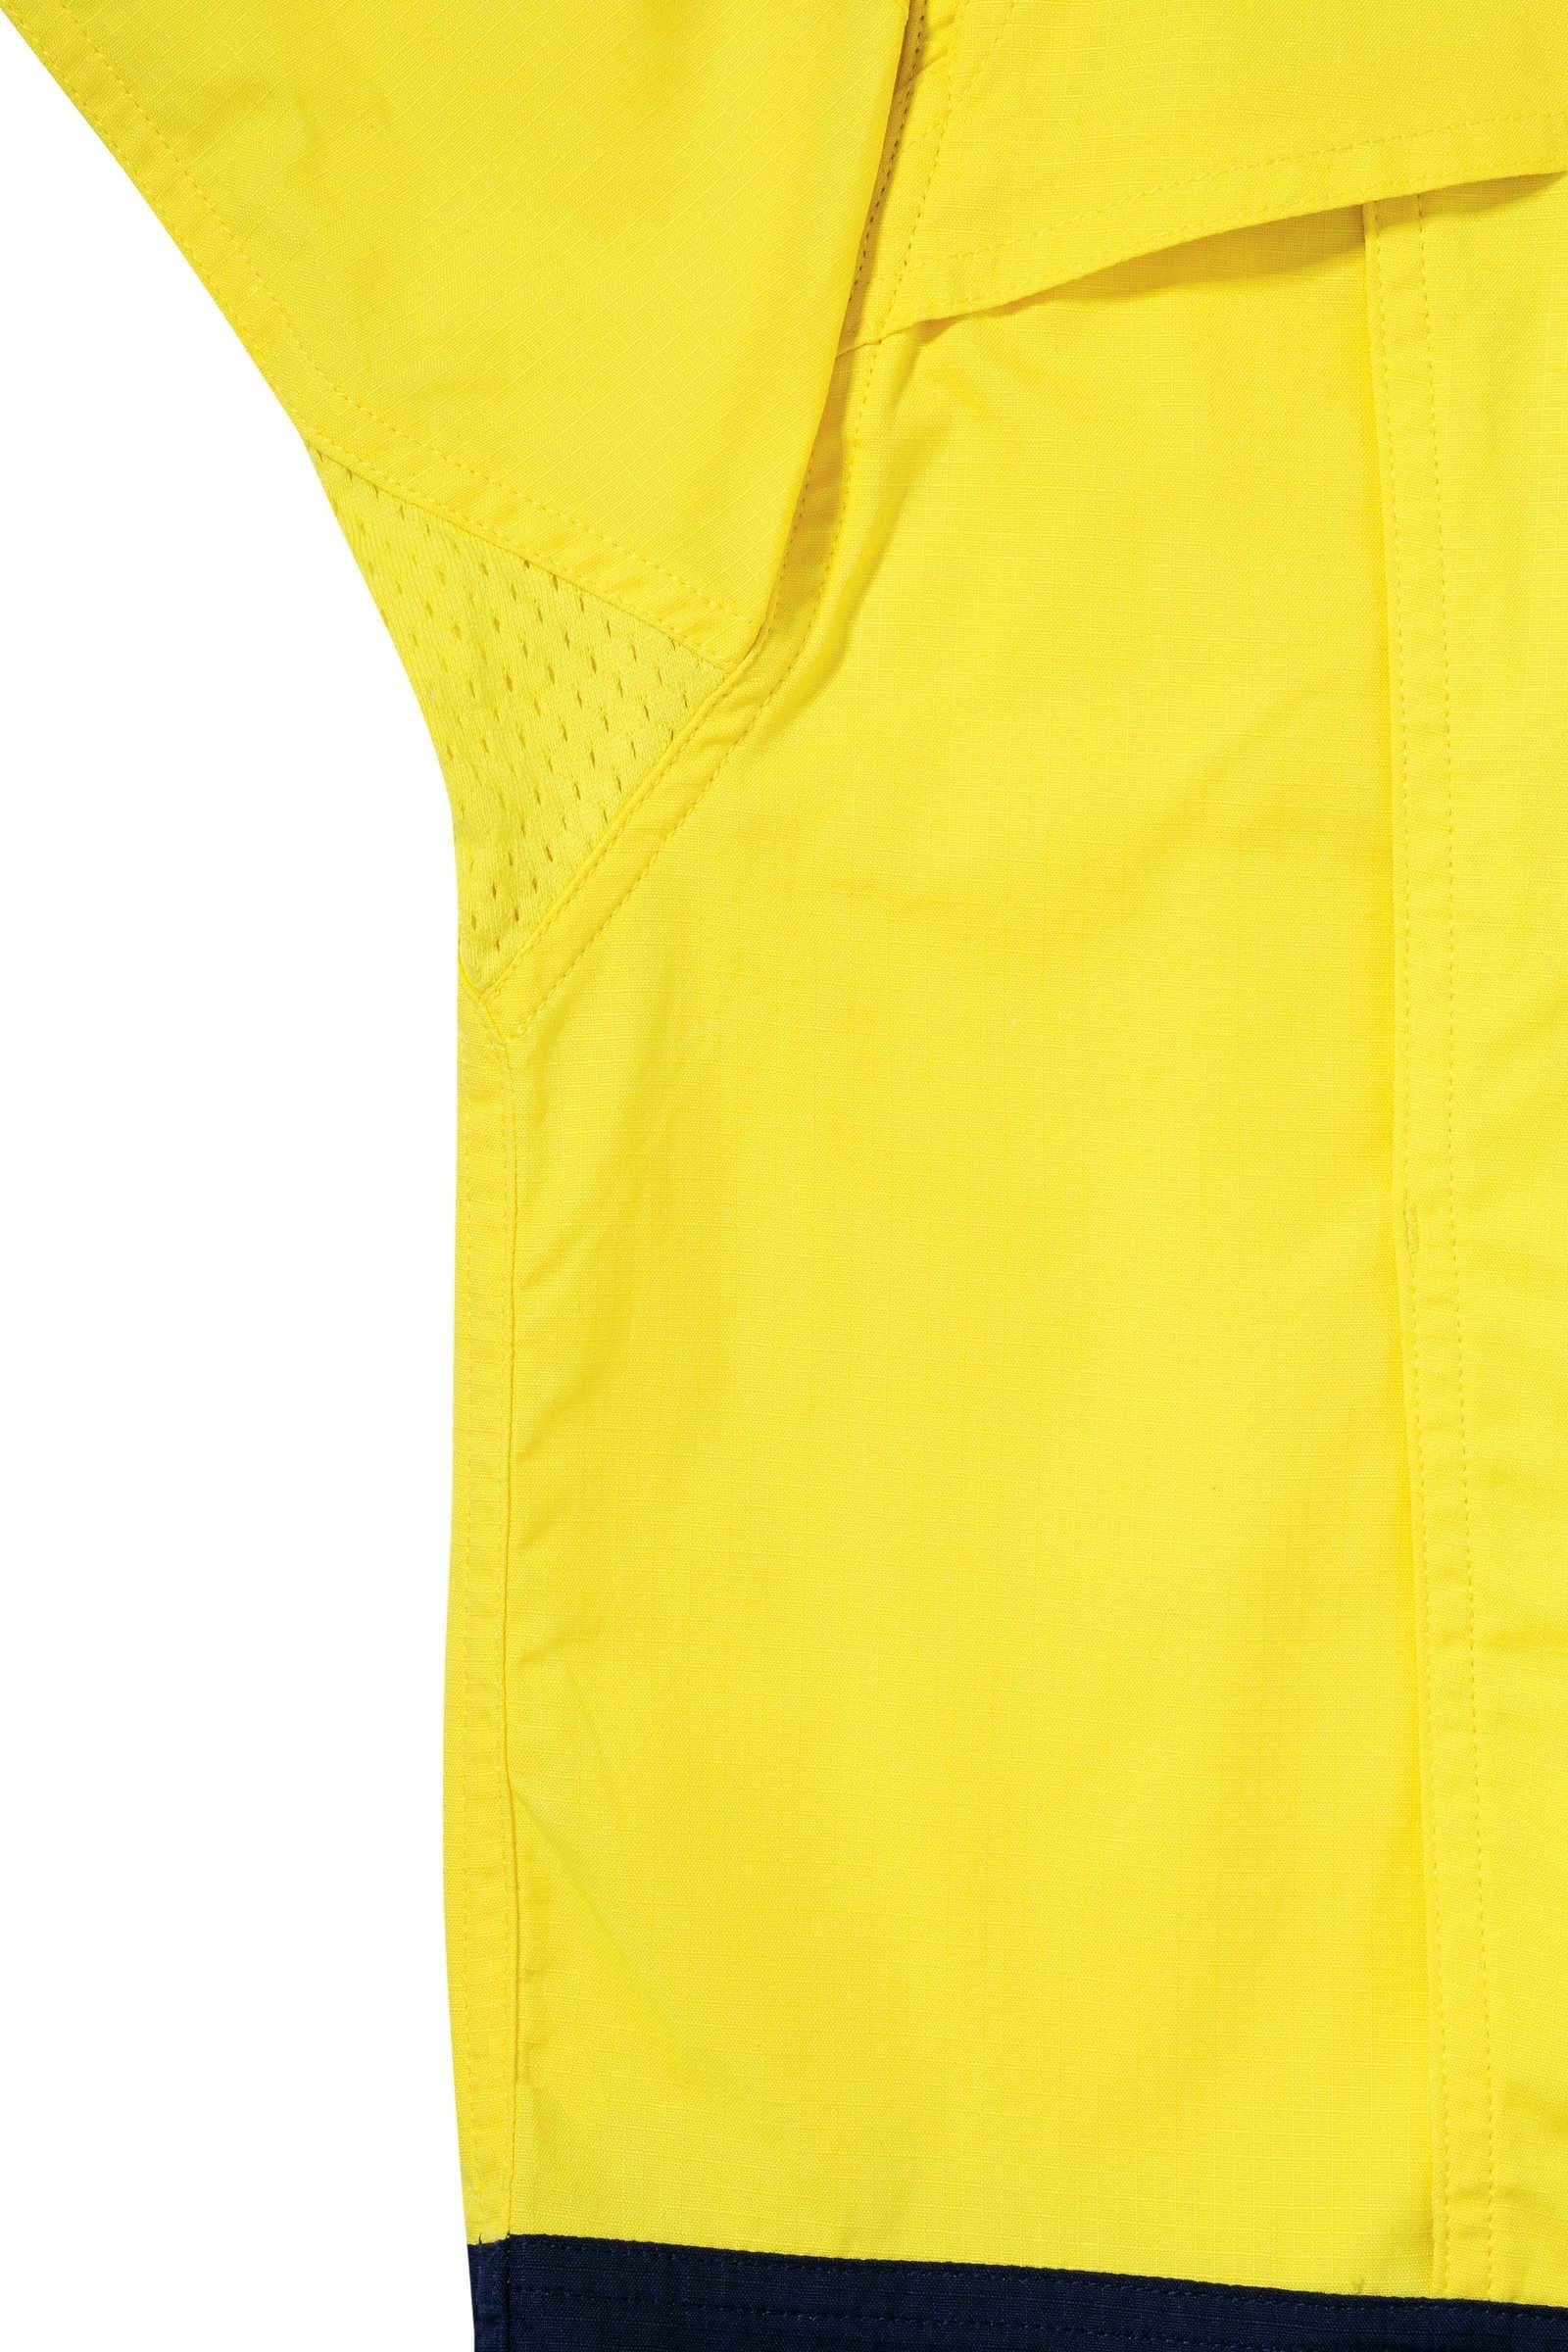 Bisley Hi Vis X Airflow™ Ripstop Shirt (BS6415) - Trade Wear